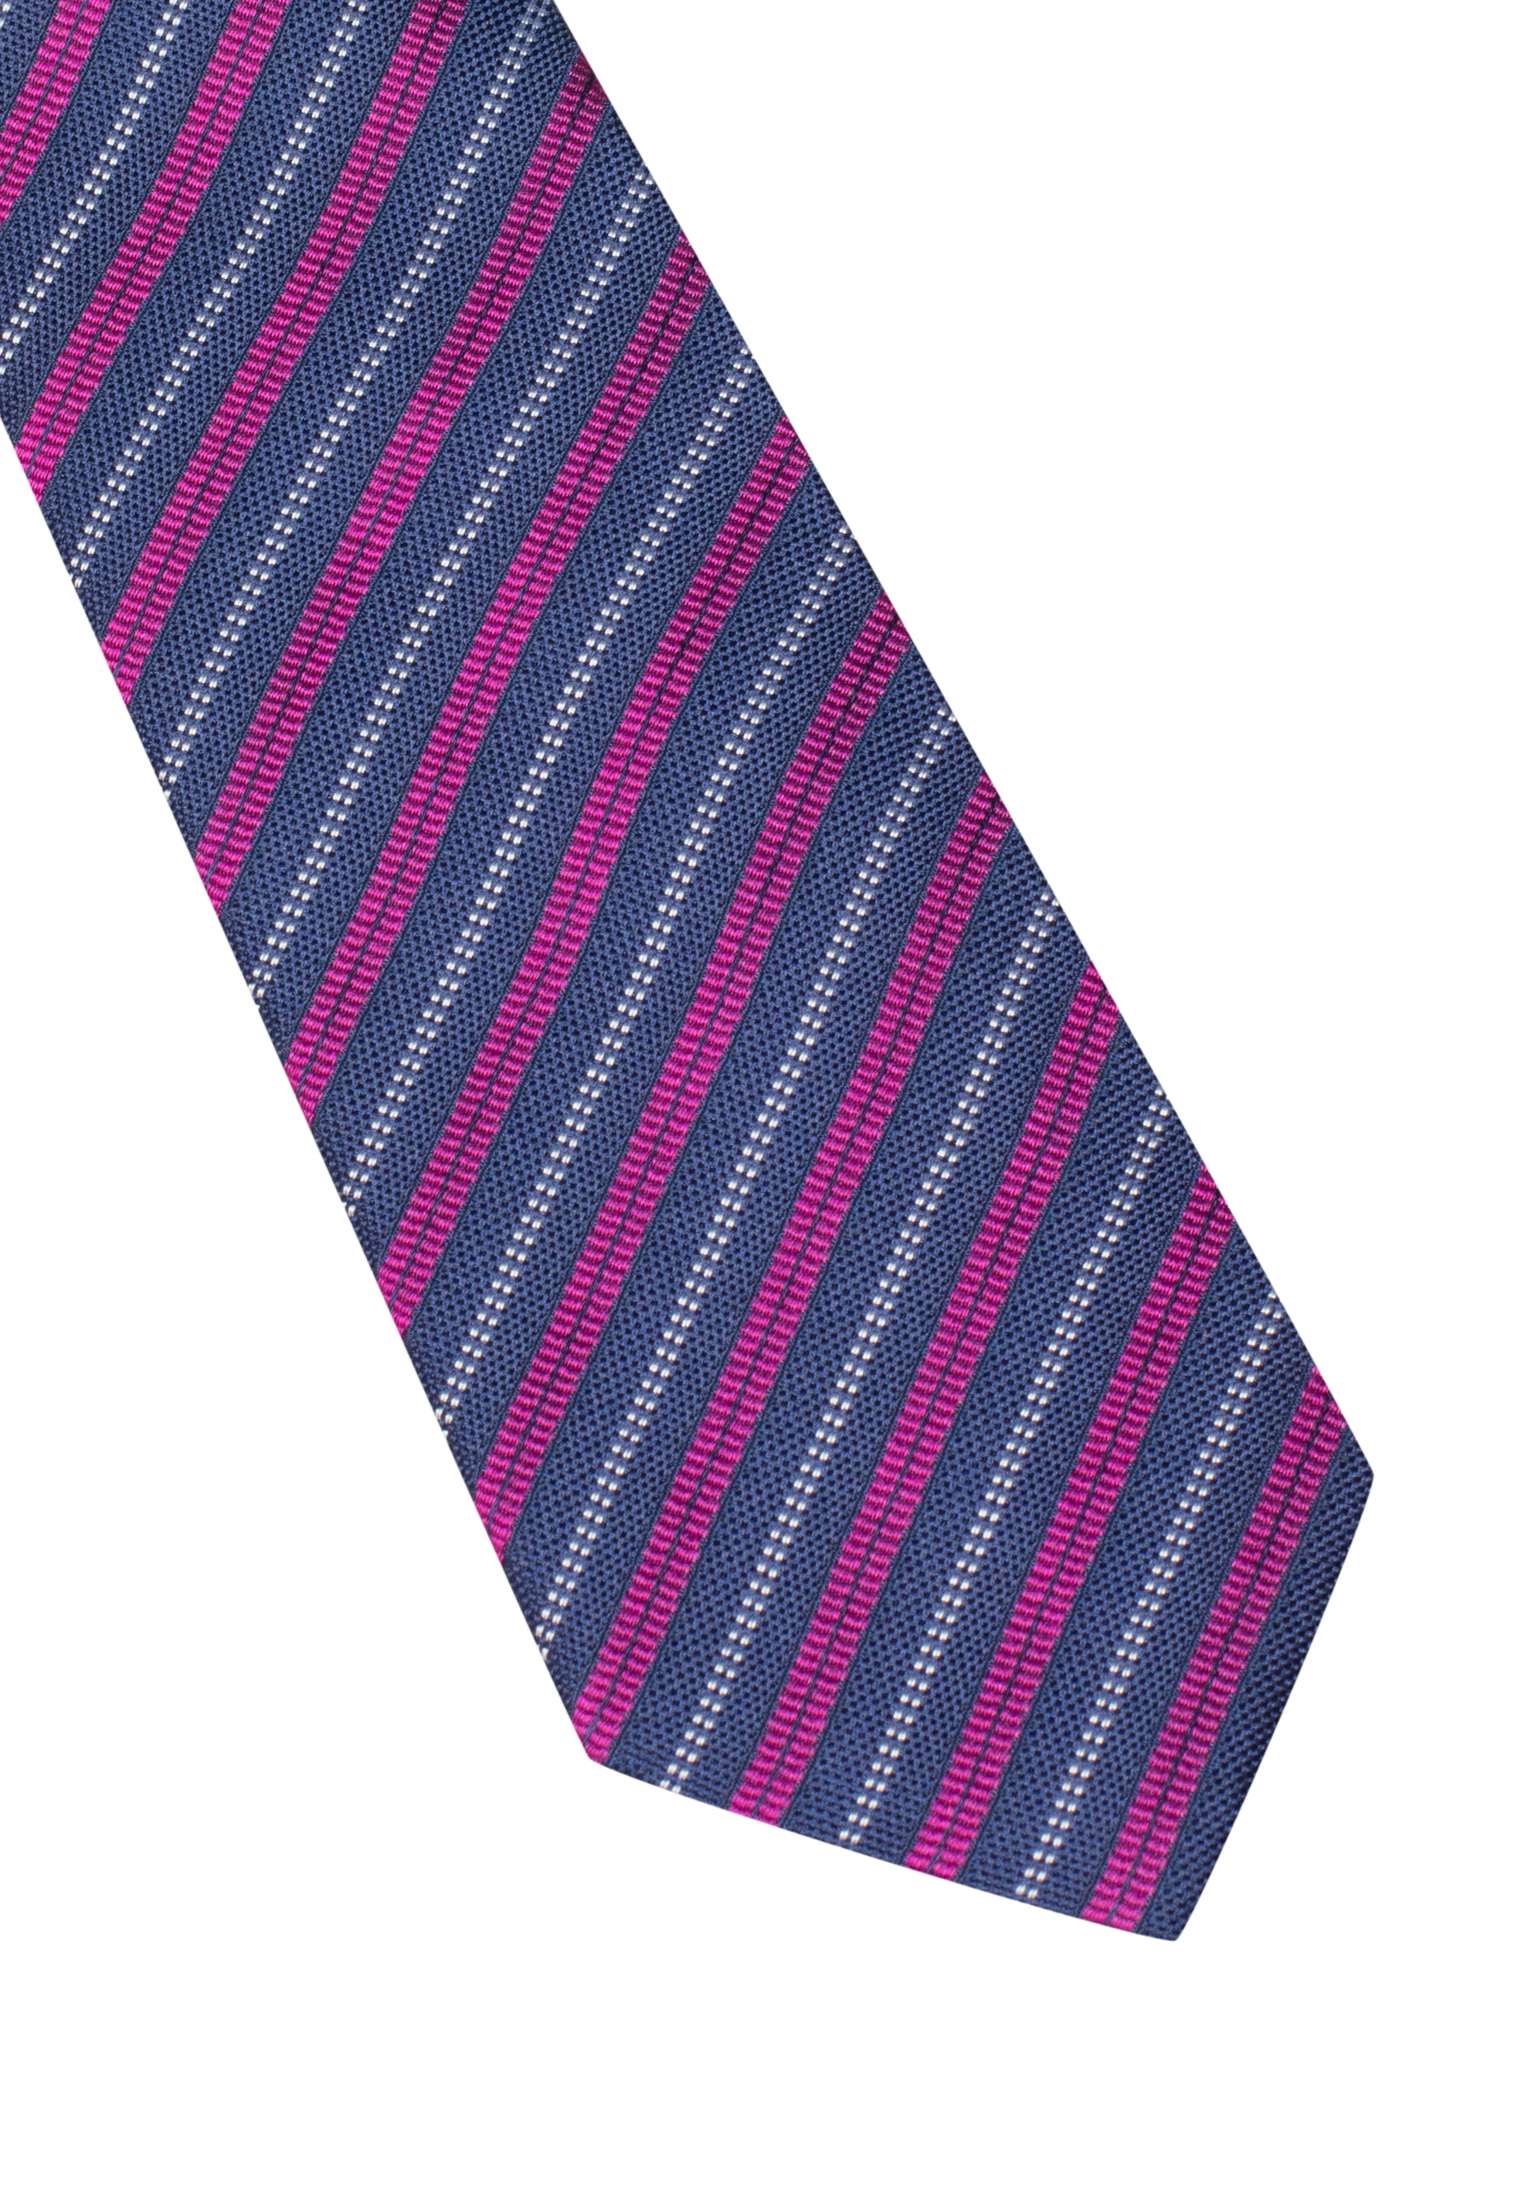 Tie in navy striped